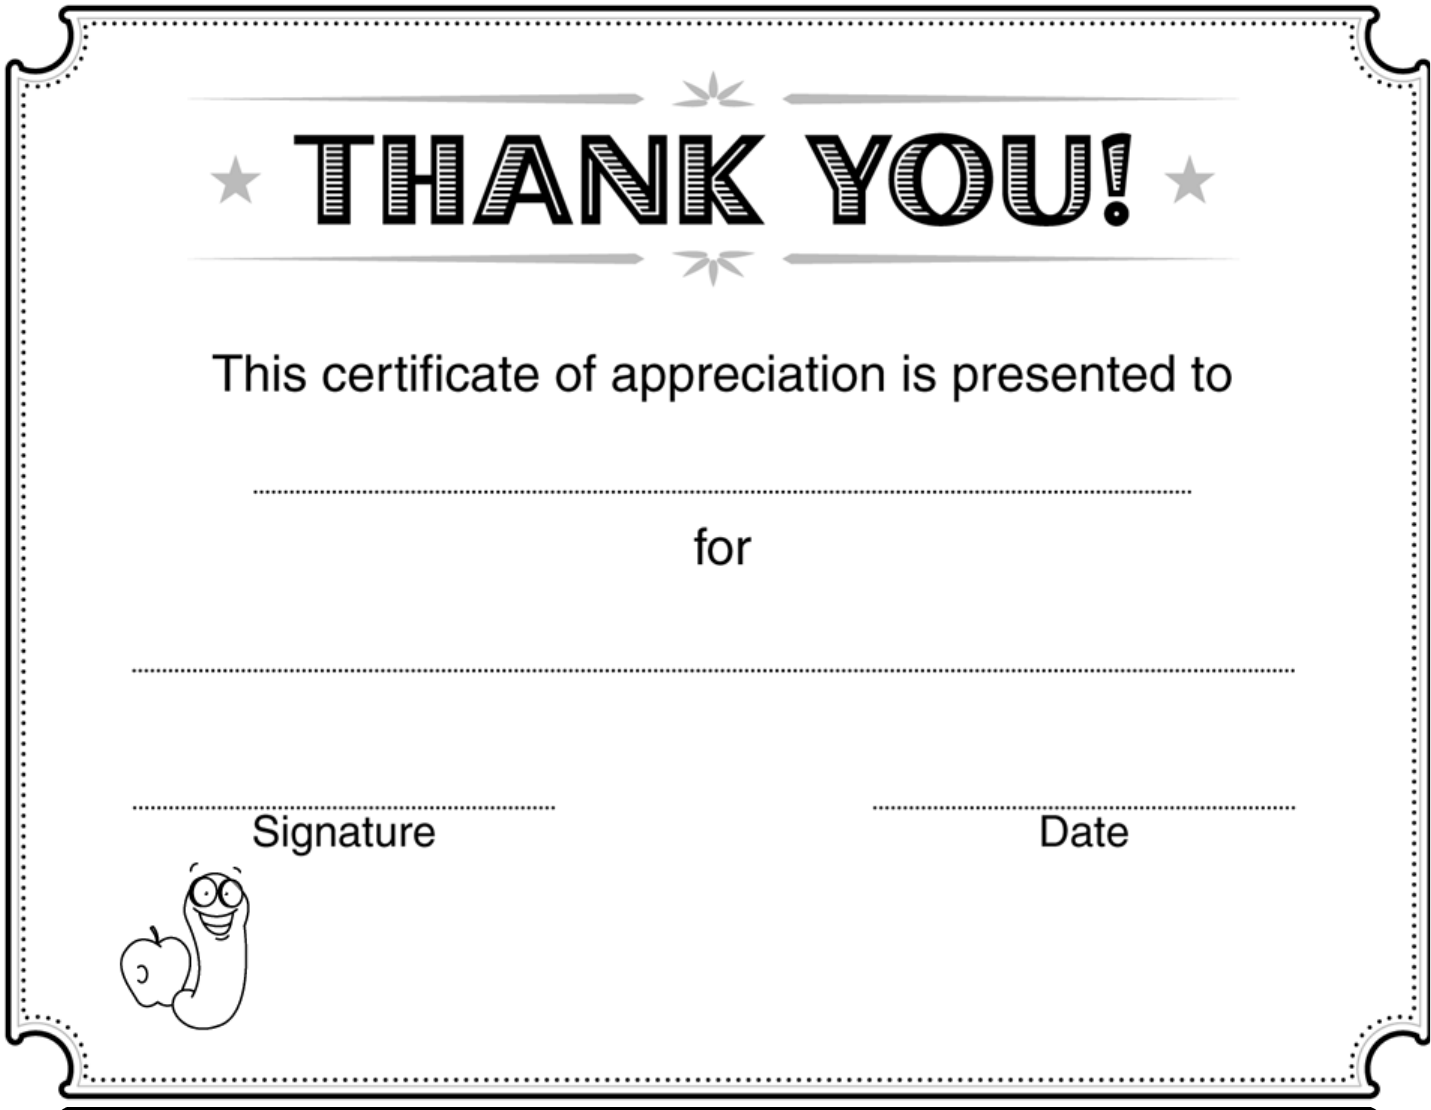 Certificate of Appreciation Template 2